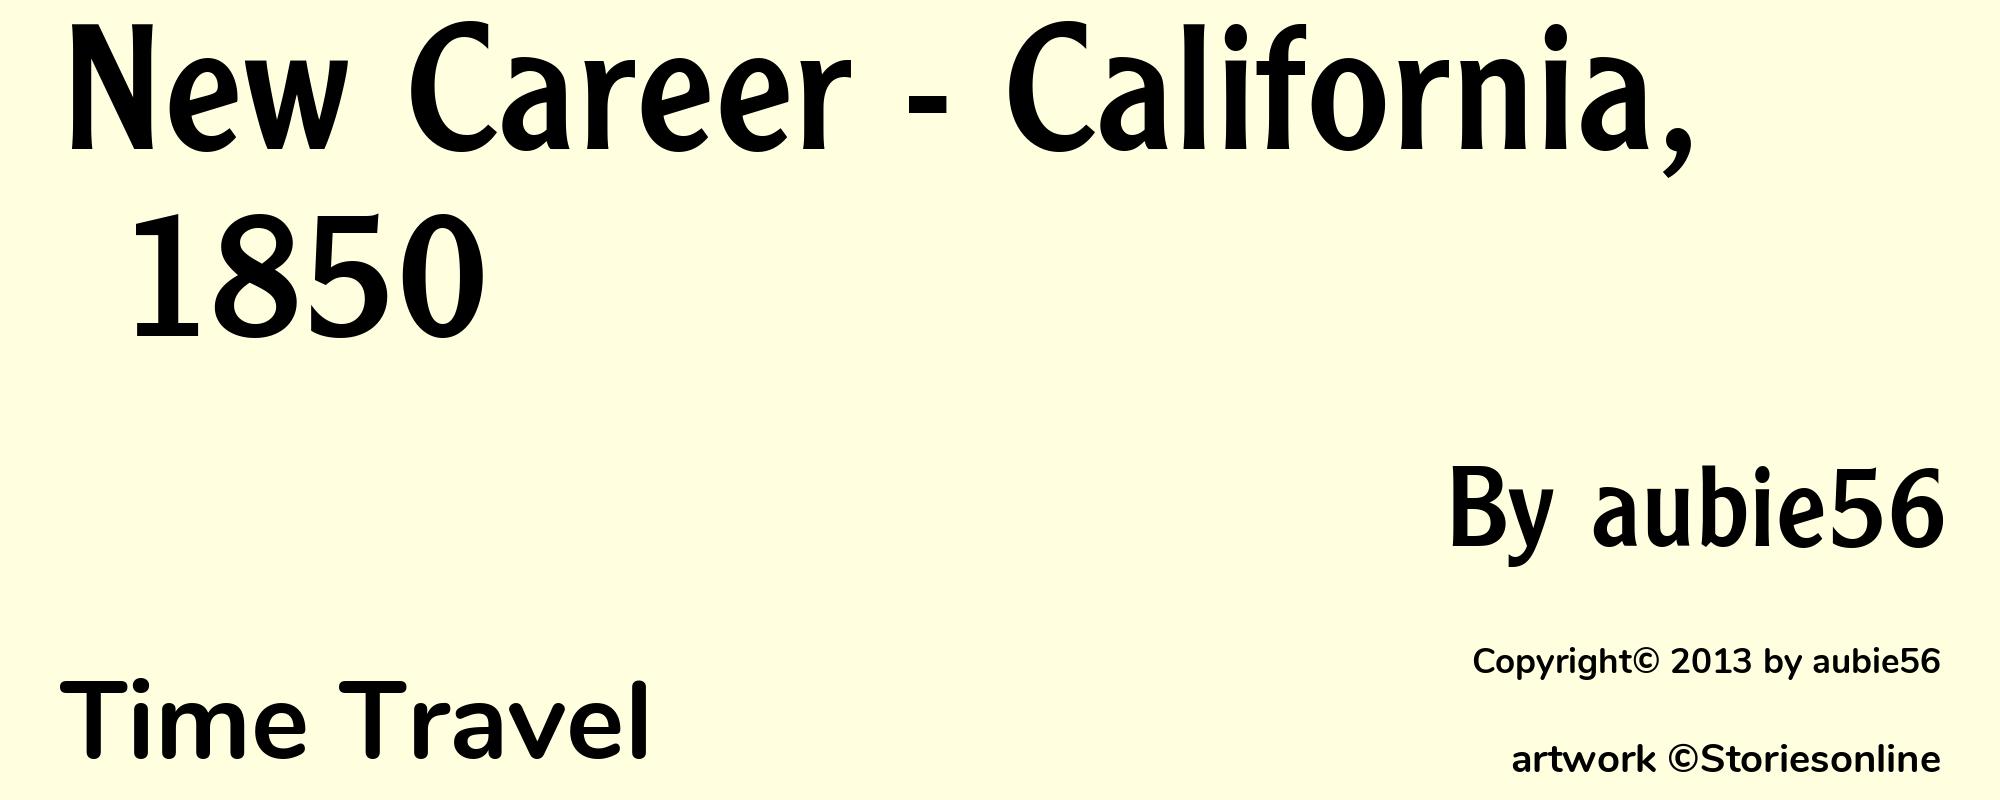 New Career - California, 1850 - Cover